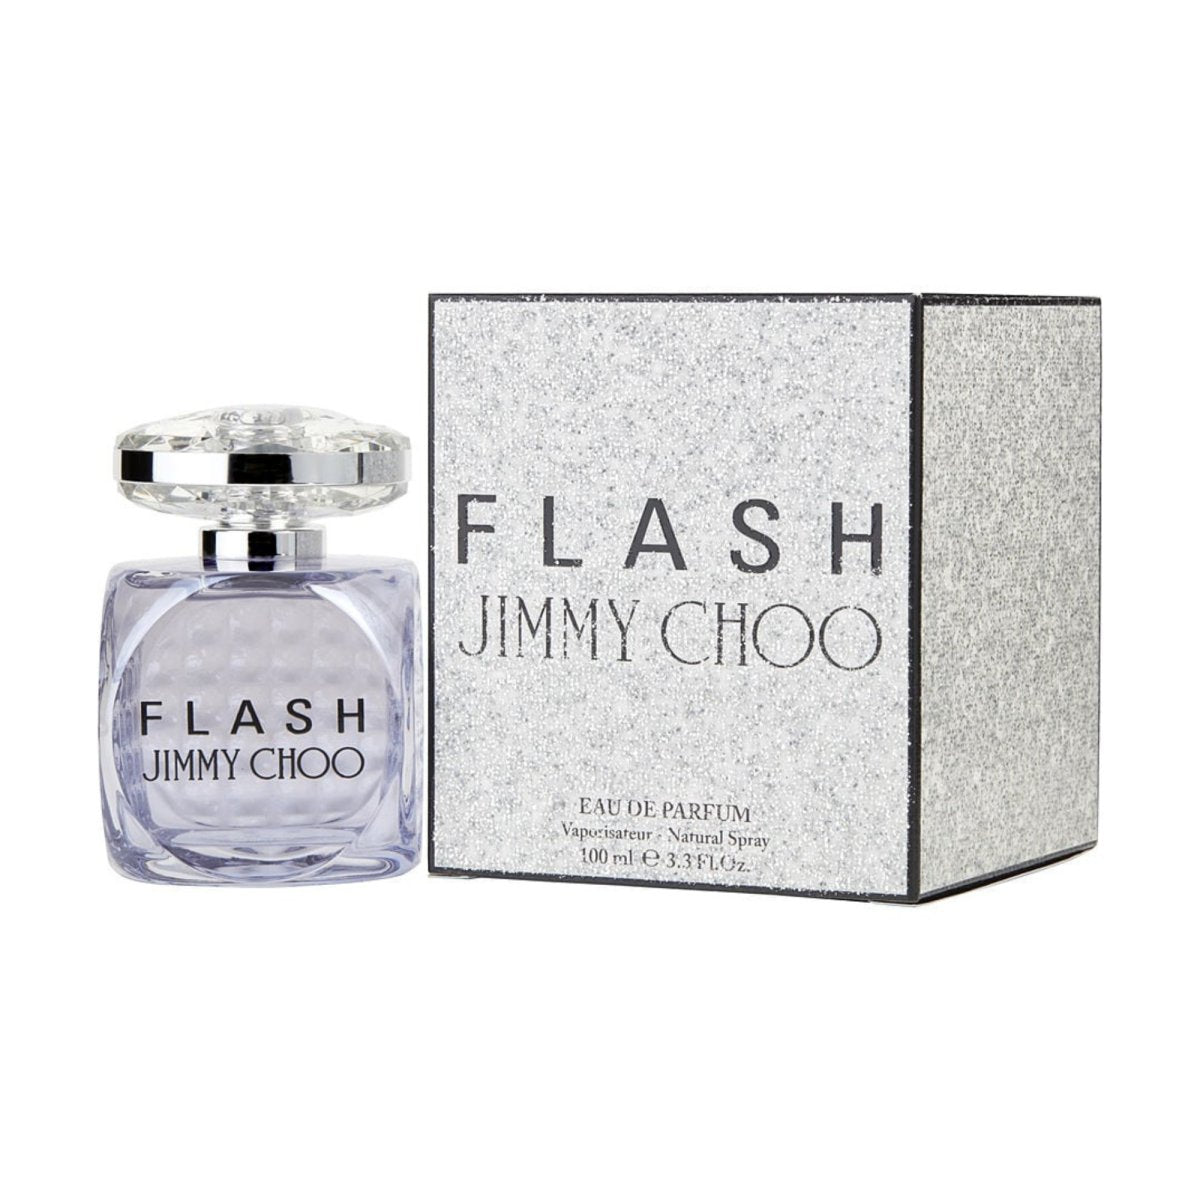 Jimmy Choo Flash Eau de Parfum 3.3 oz - Perfume headqarters - Jimmy Choo - Fragrance